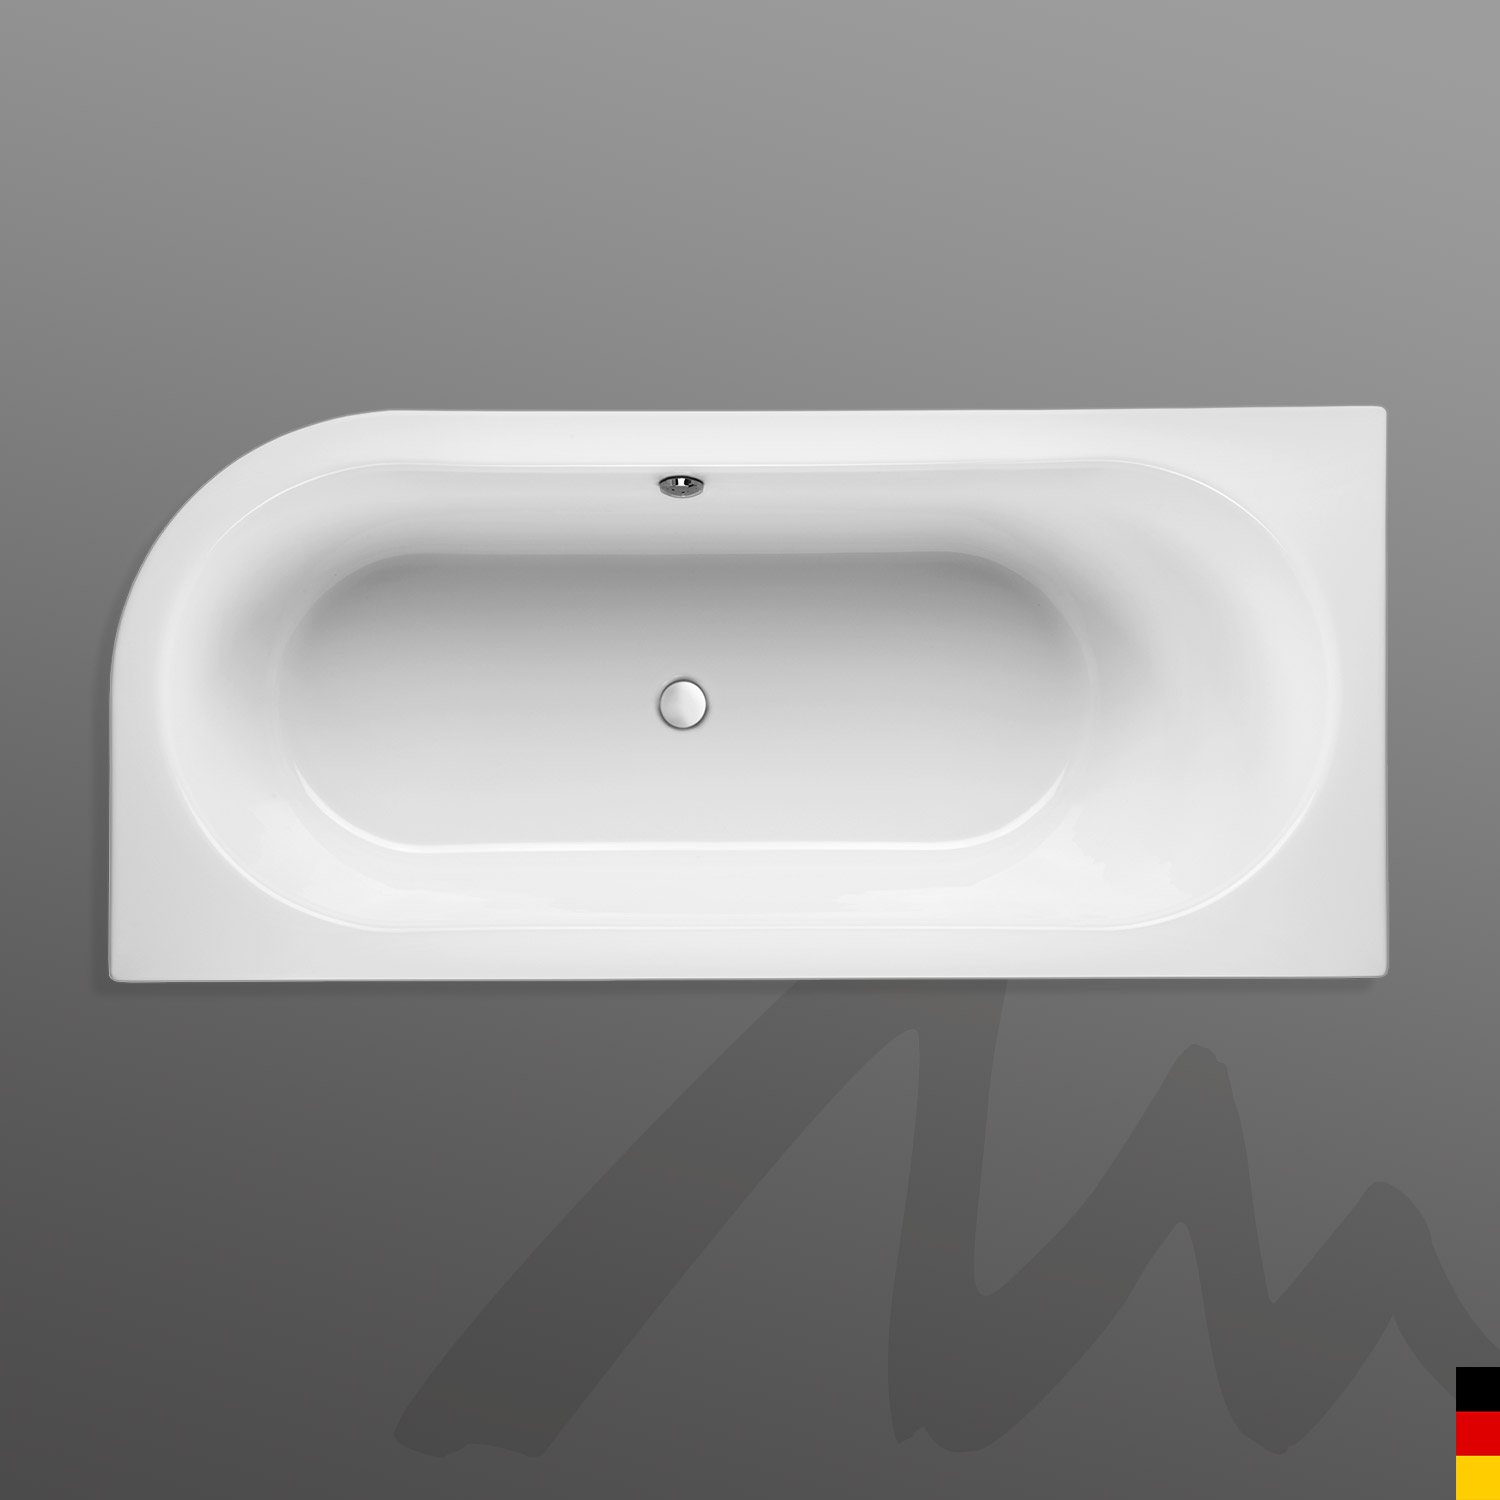 Mauersberger Badewanne Oval Primo 2 - 170/75 uno  170x75x44  Farbe: weiß